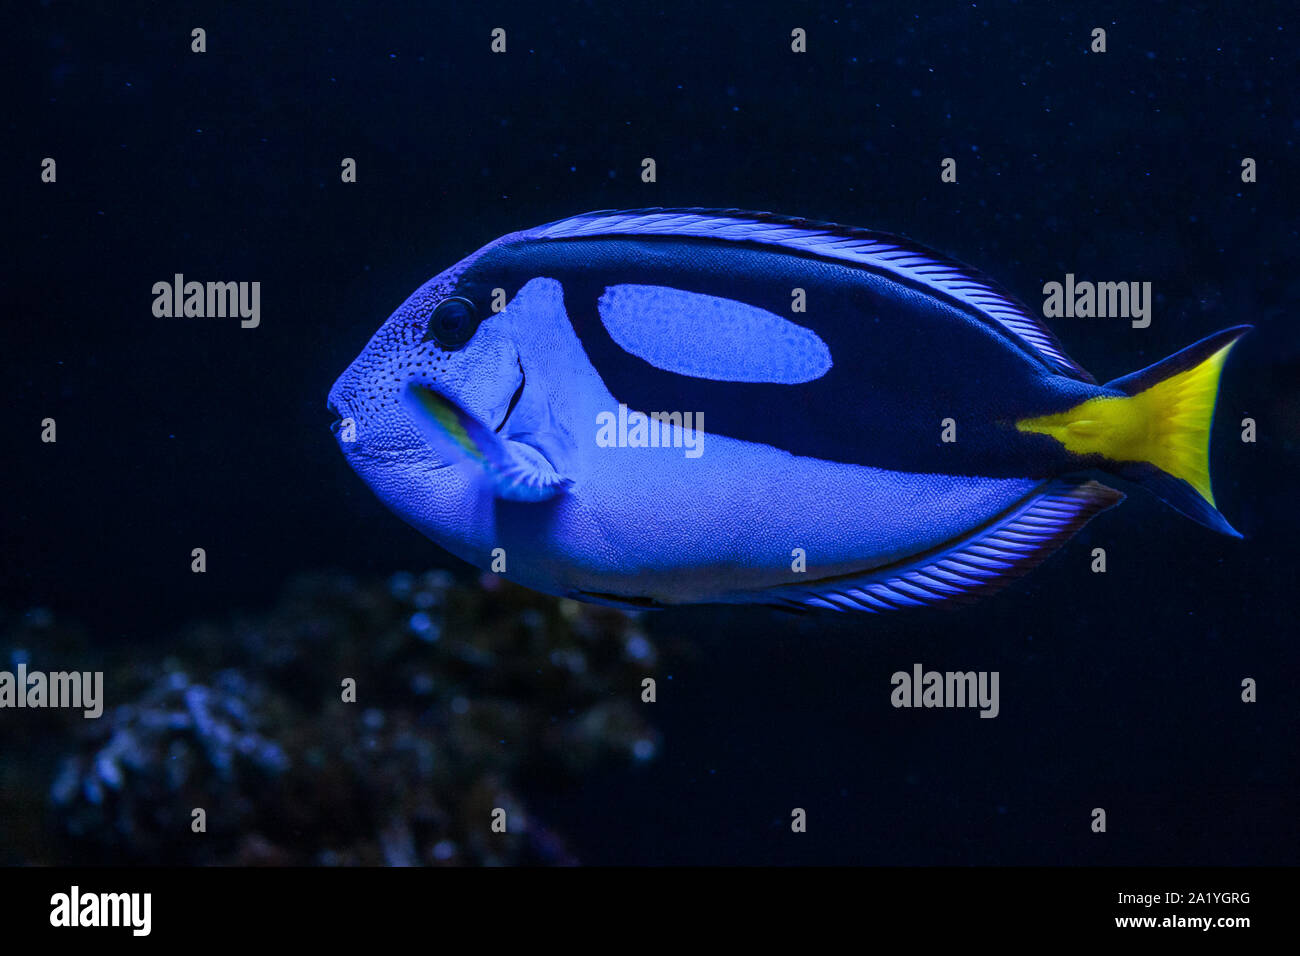 Blue Surgeonfish closeup against dark background Stock Photo